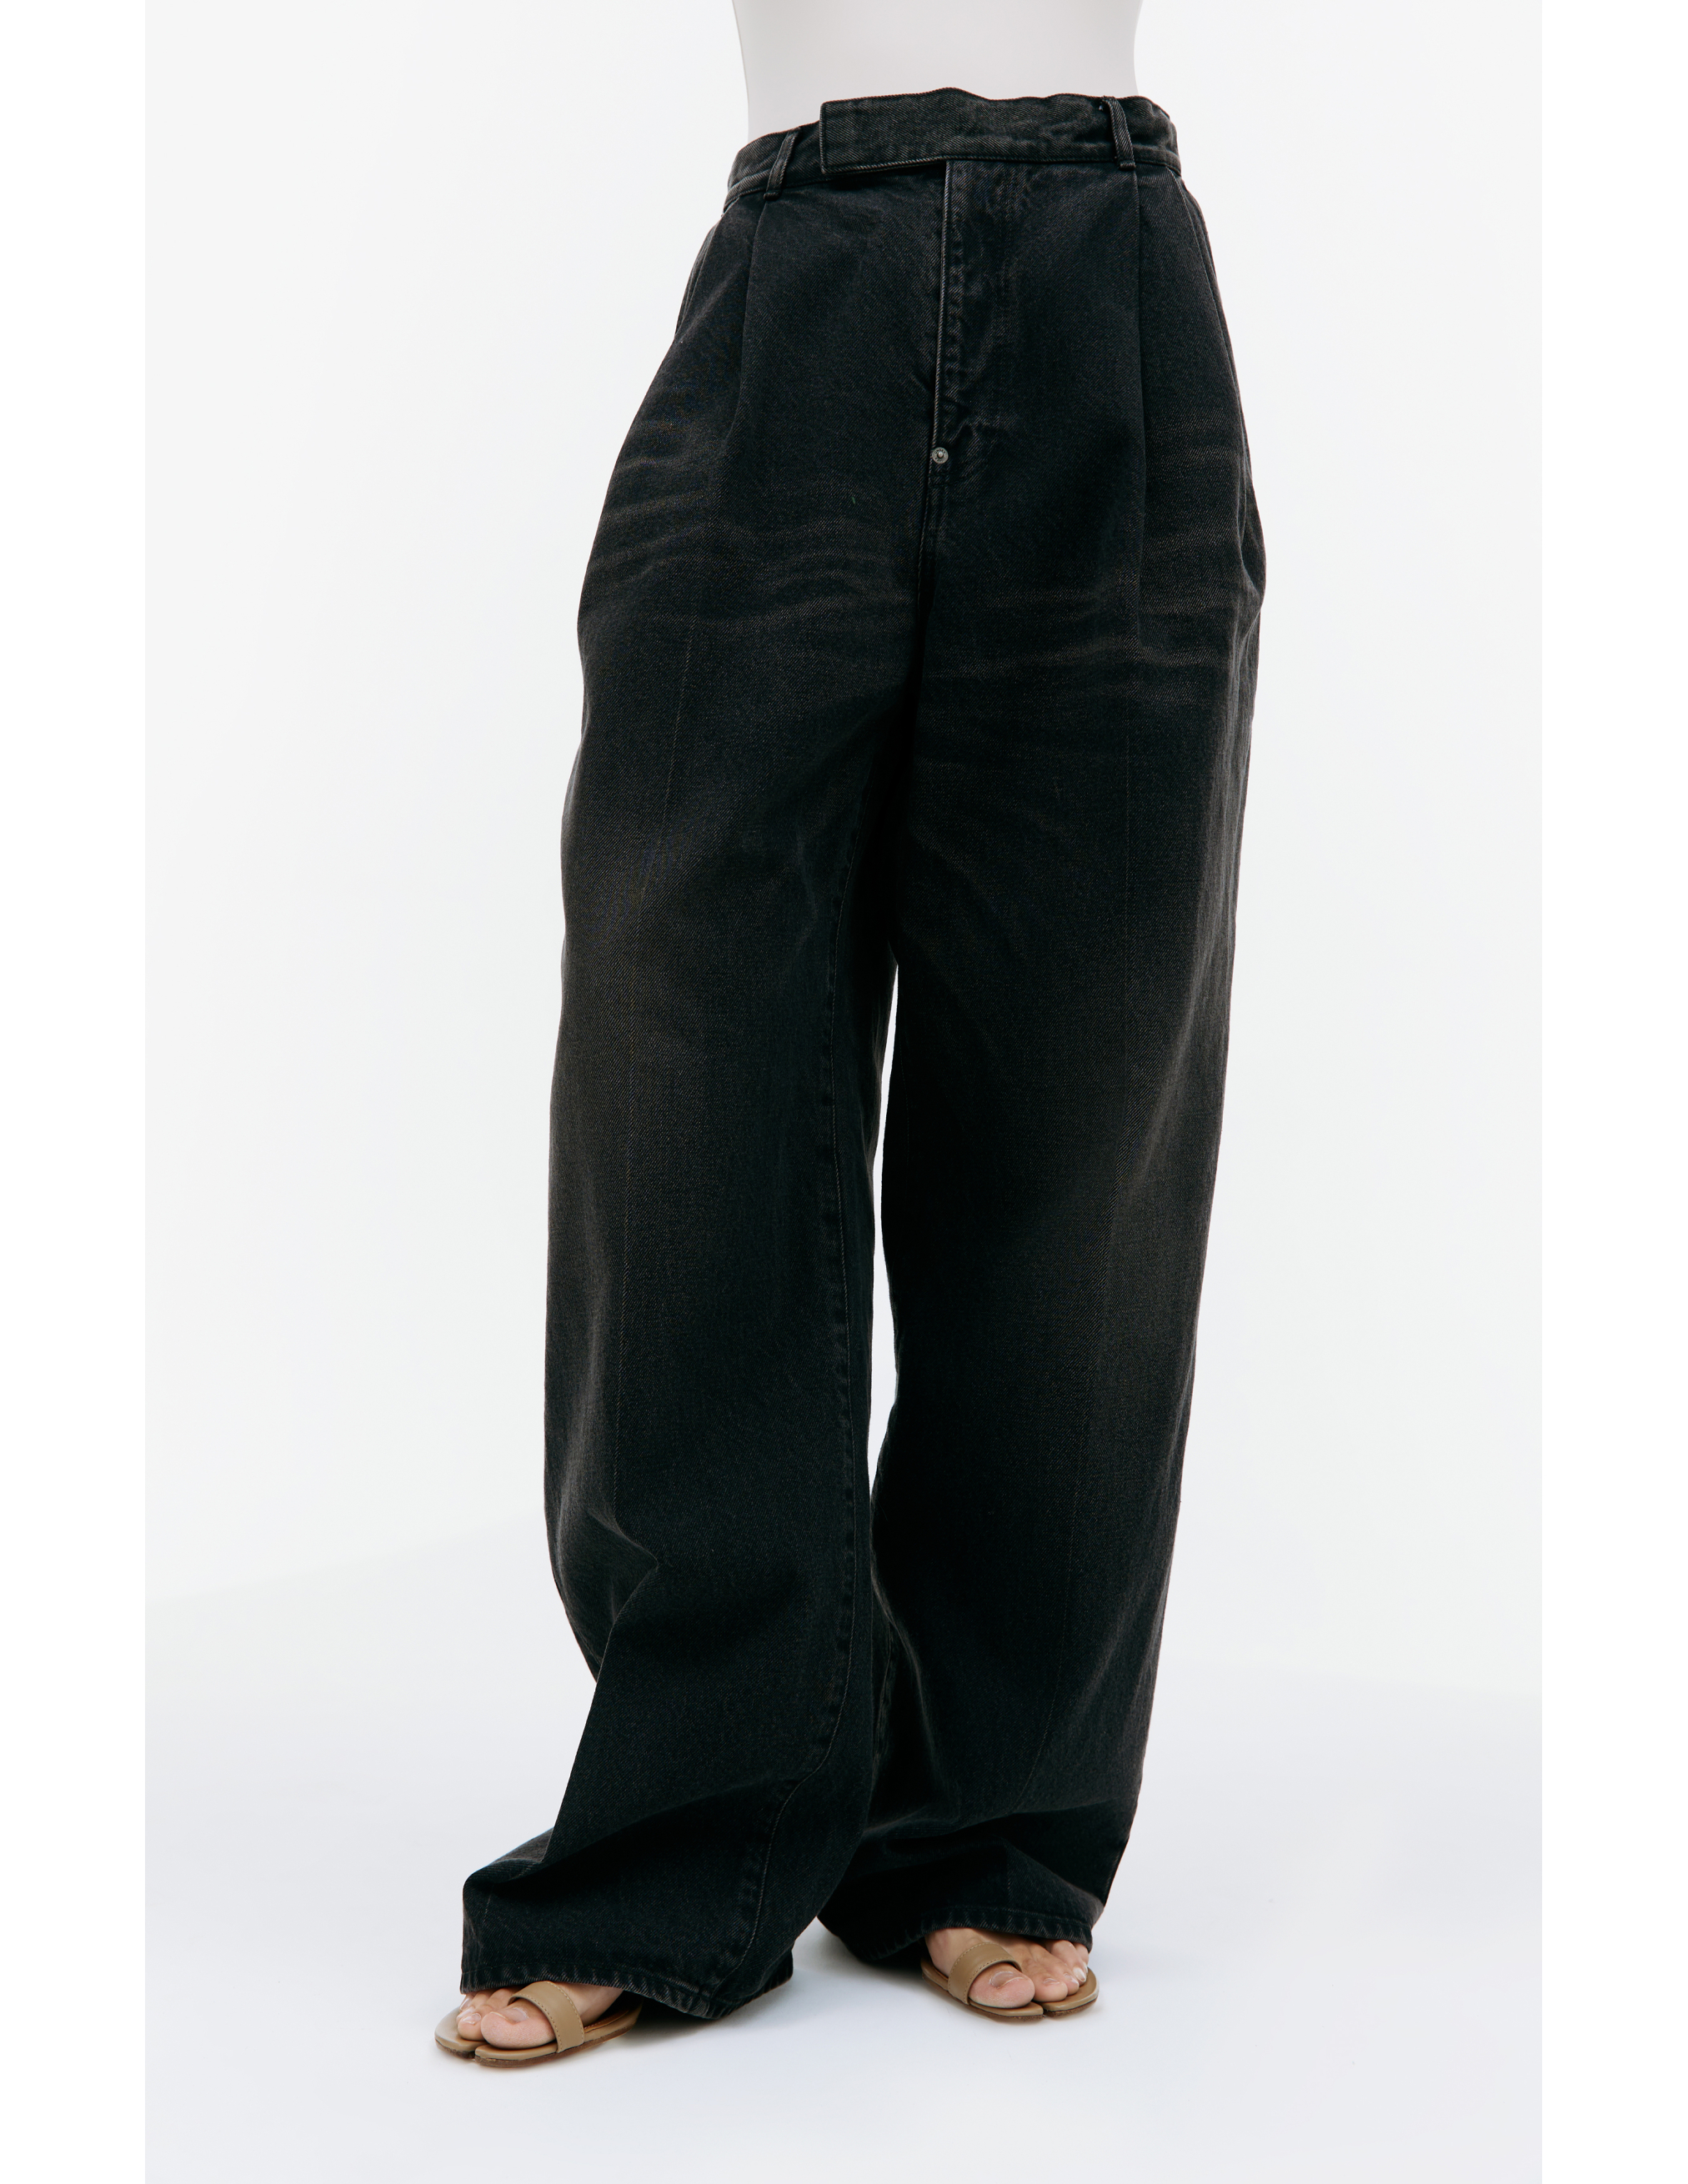 Широкие джинсы с защипами Undercover UC1C1504-2/BLACK, размер 3;4 UC1C1504-2/BLACK - фото 3